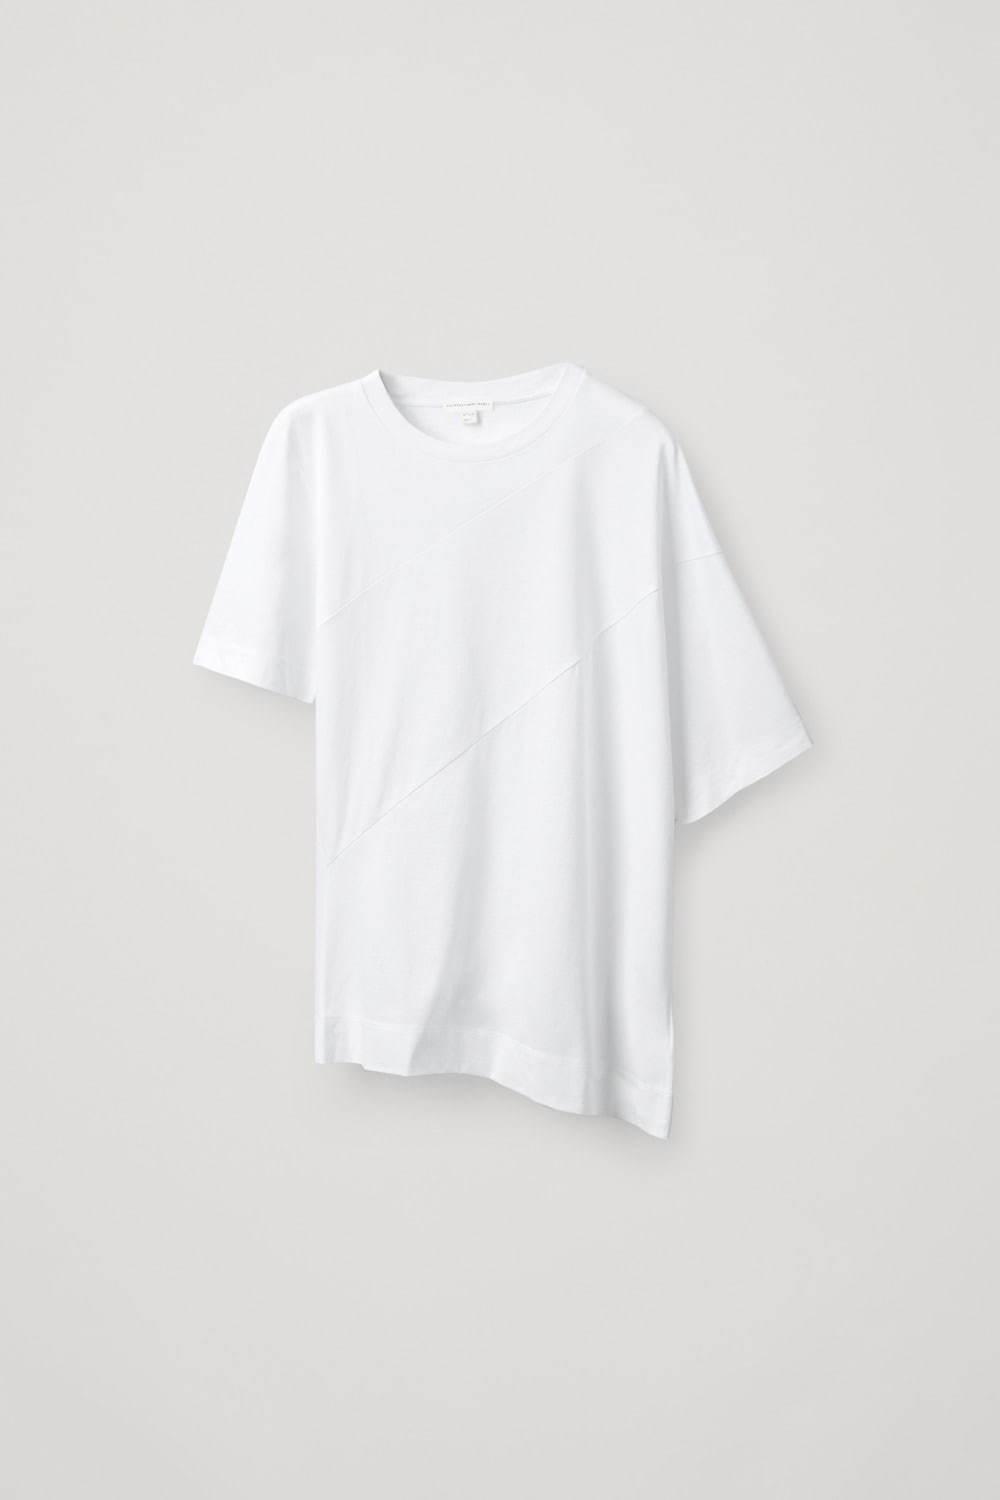 COS“白T”に特化したコレクション「ホワイト Tシャツ プロジェクト」メンズ＆ウィメンズ全7型 コピー